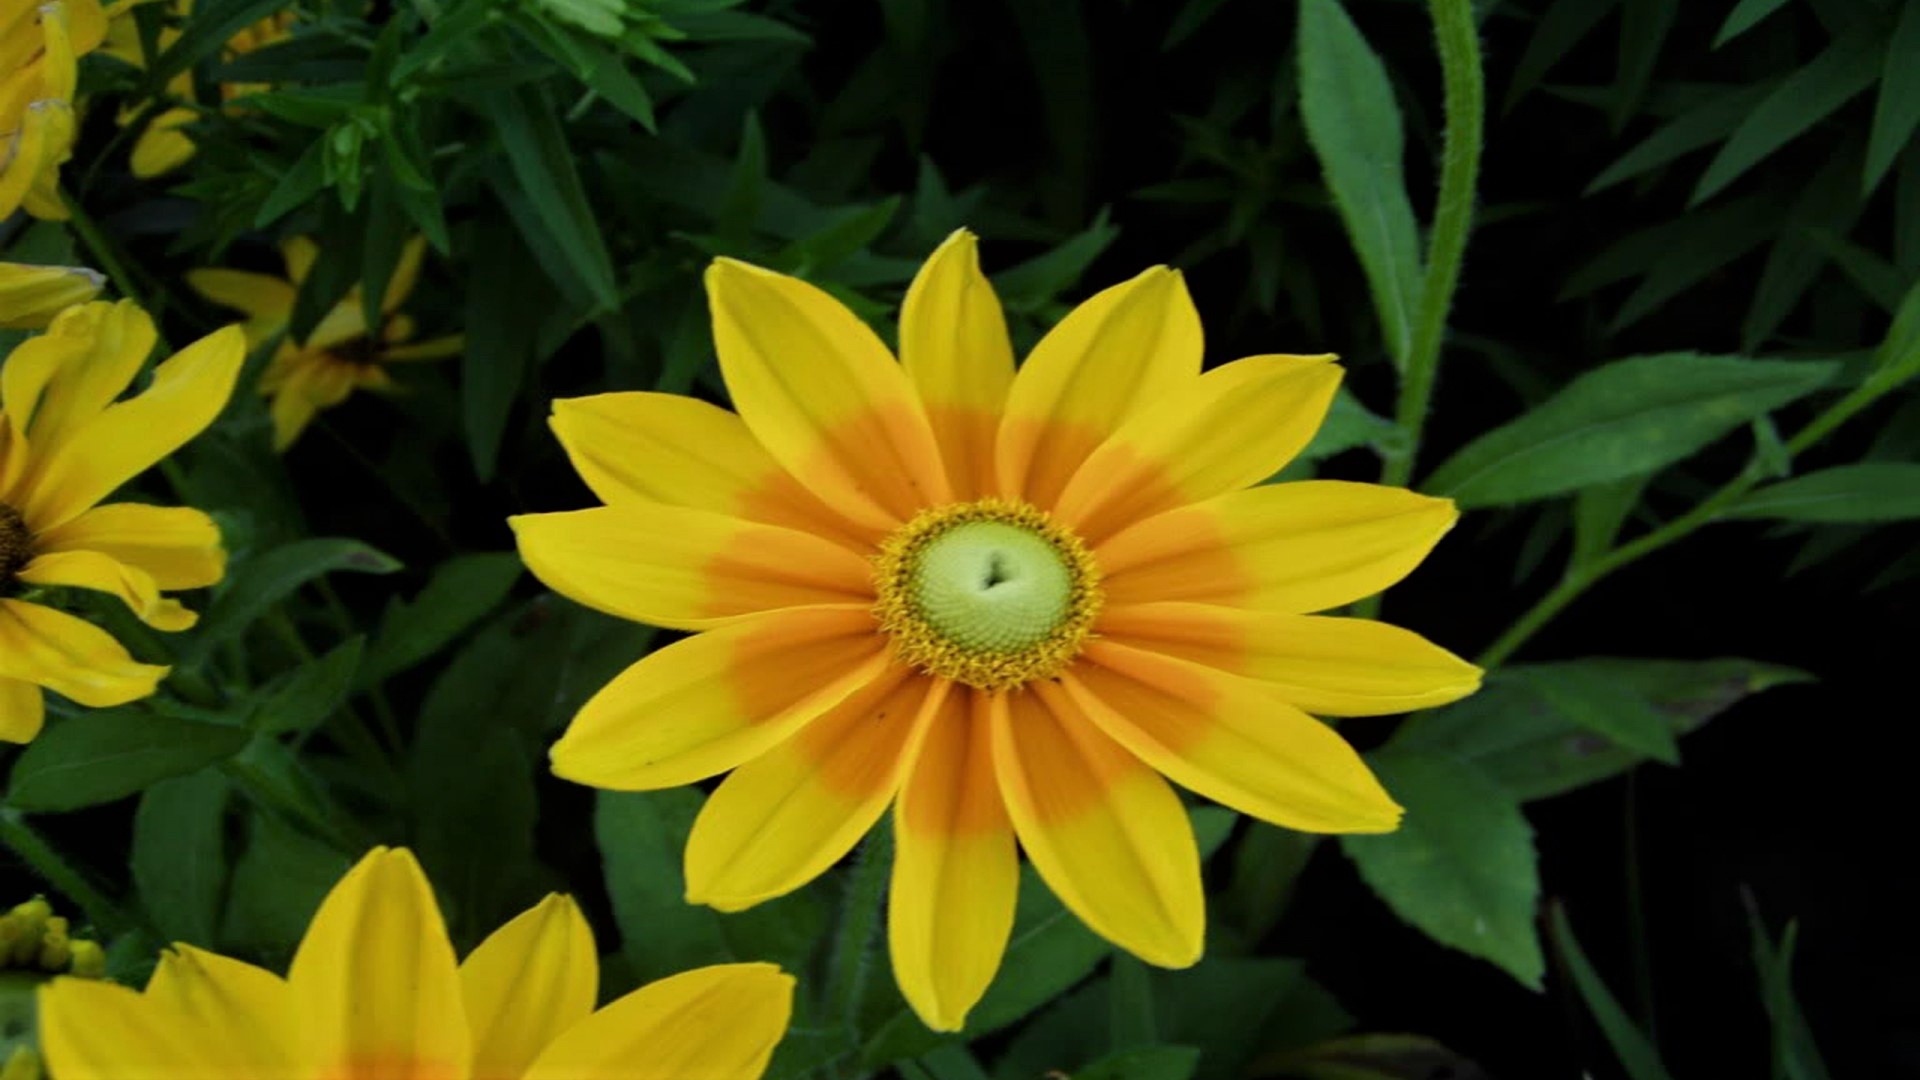 earth, black eyed susan, flower, rudbeckia, yellow flower, flowers